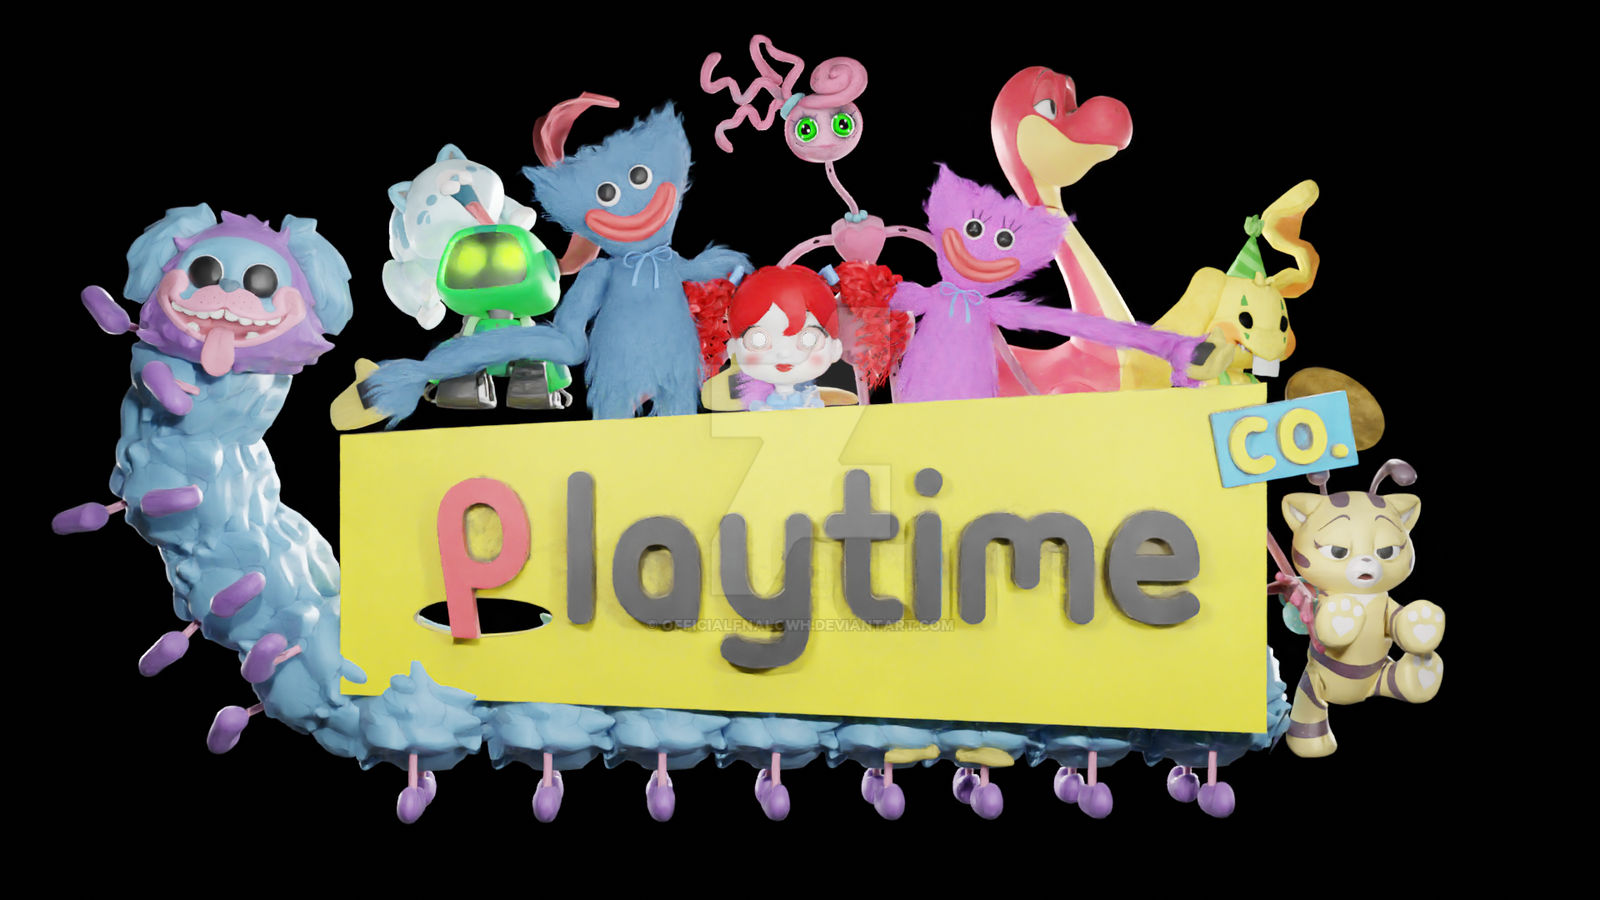 Playtime co logo 